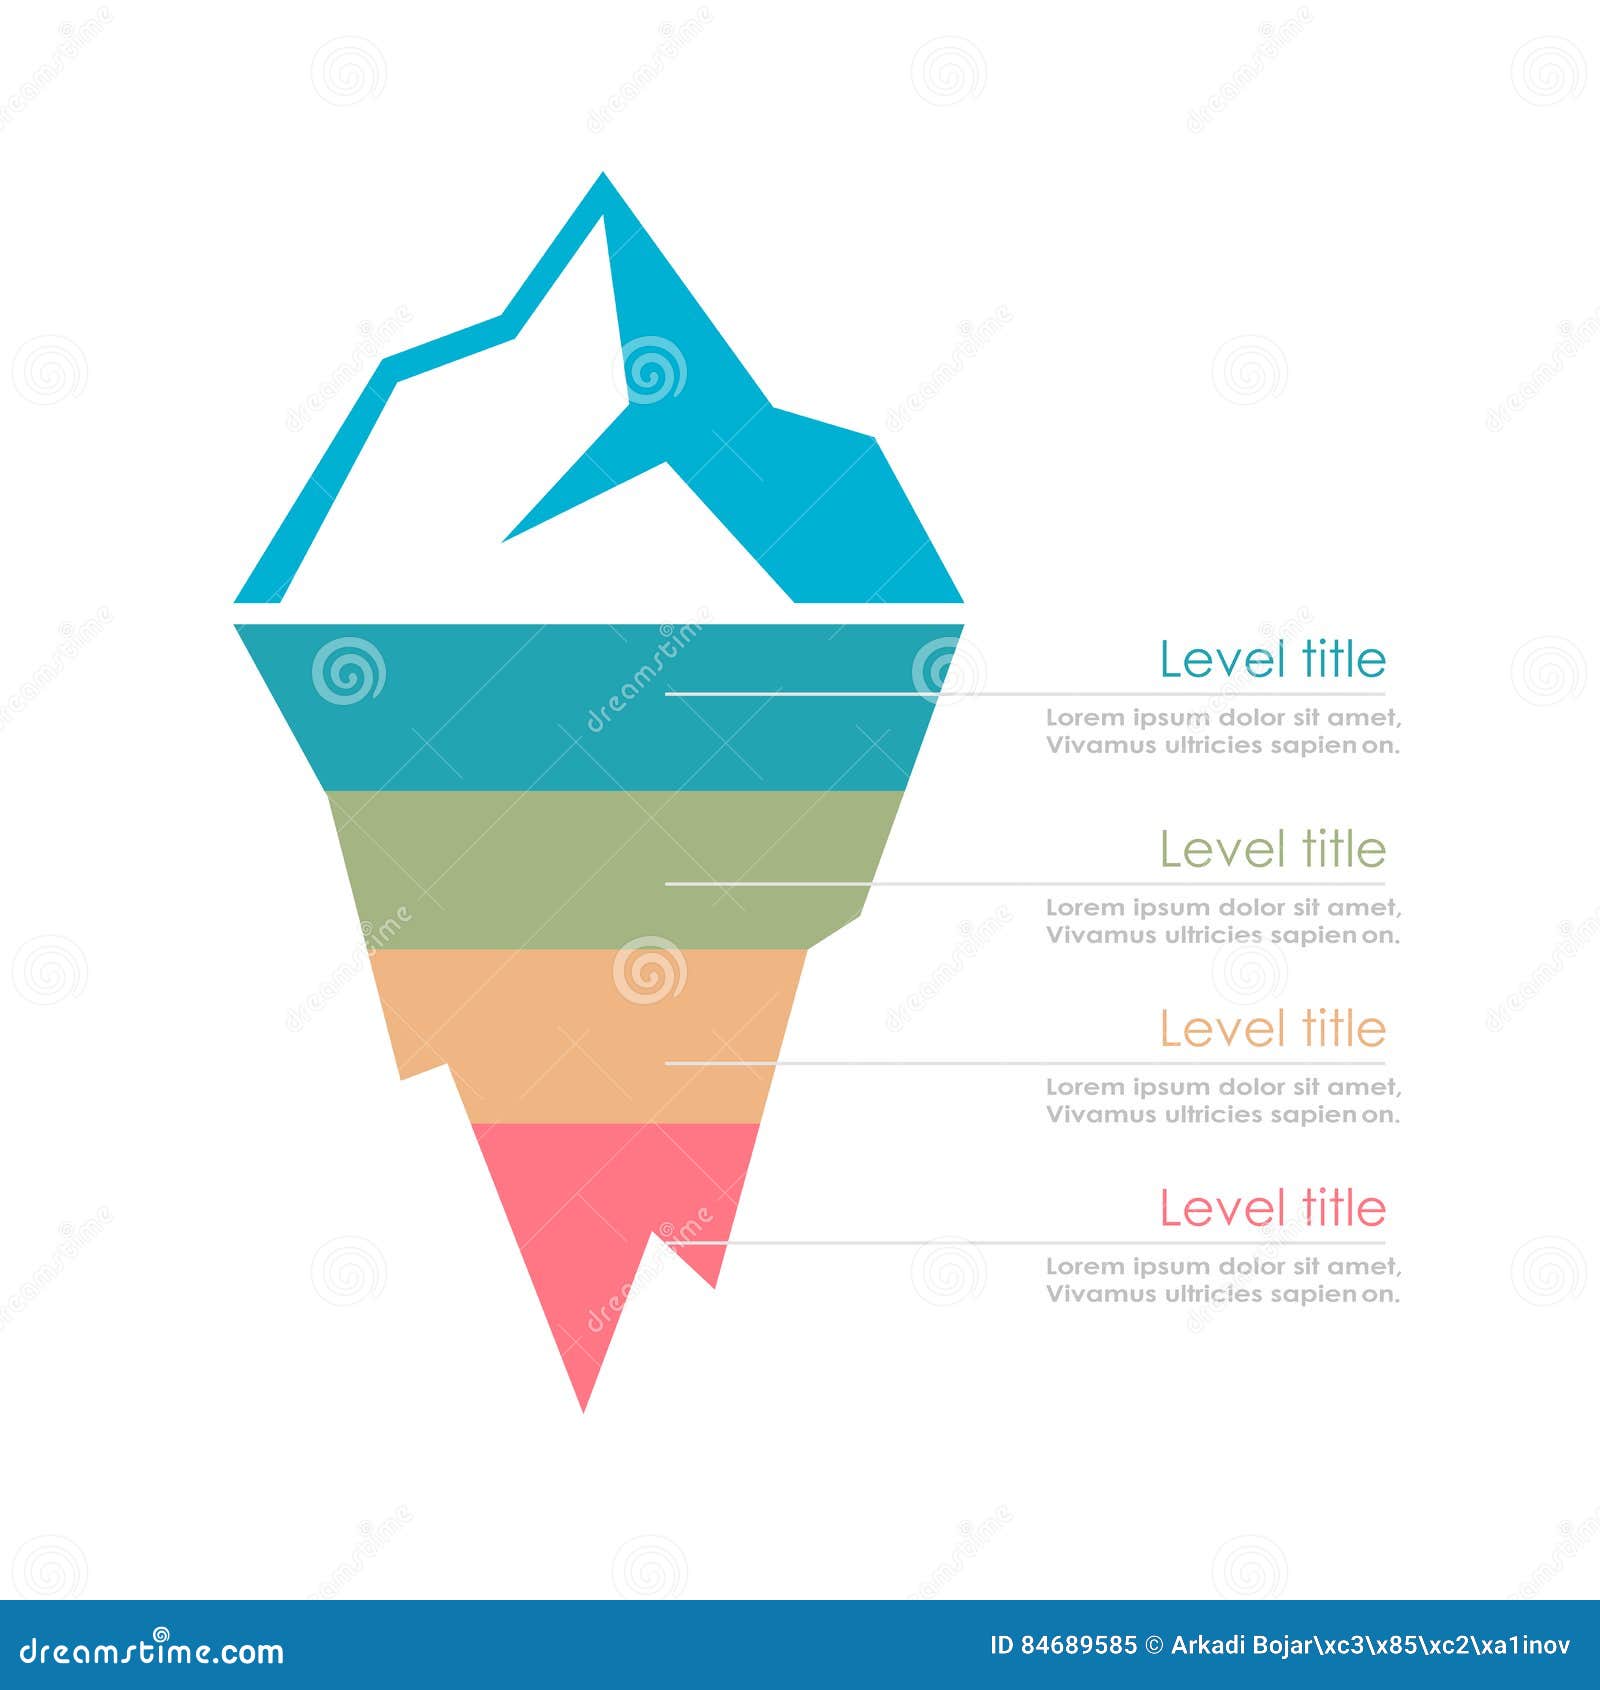 risk analysis iceberg  layered diagram